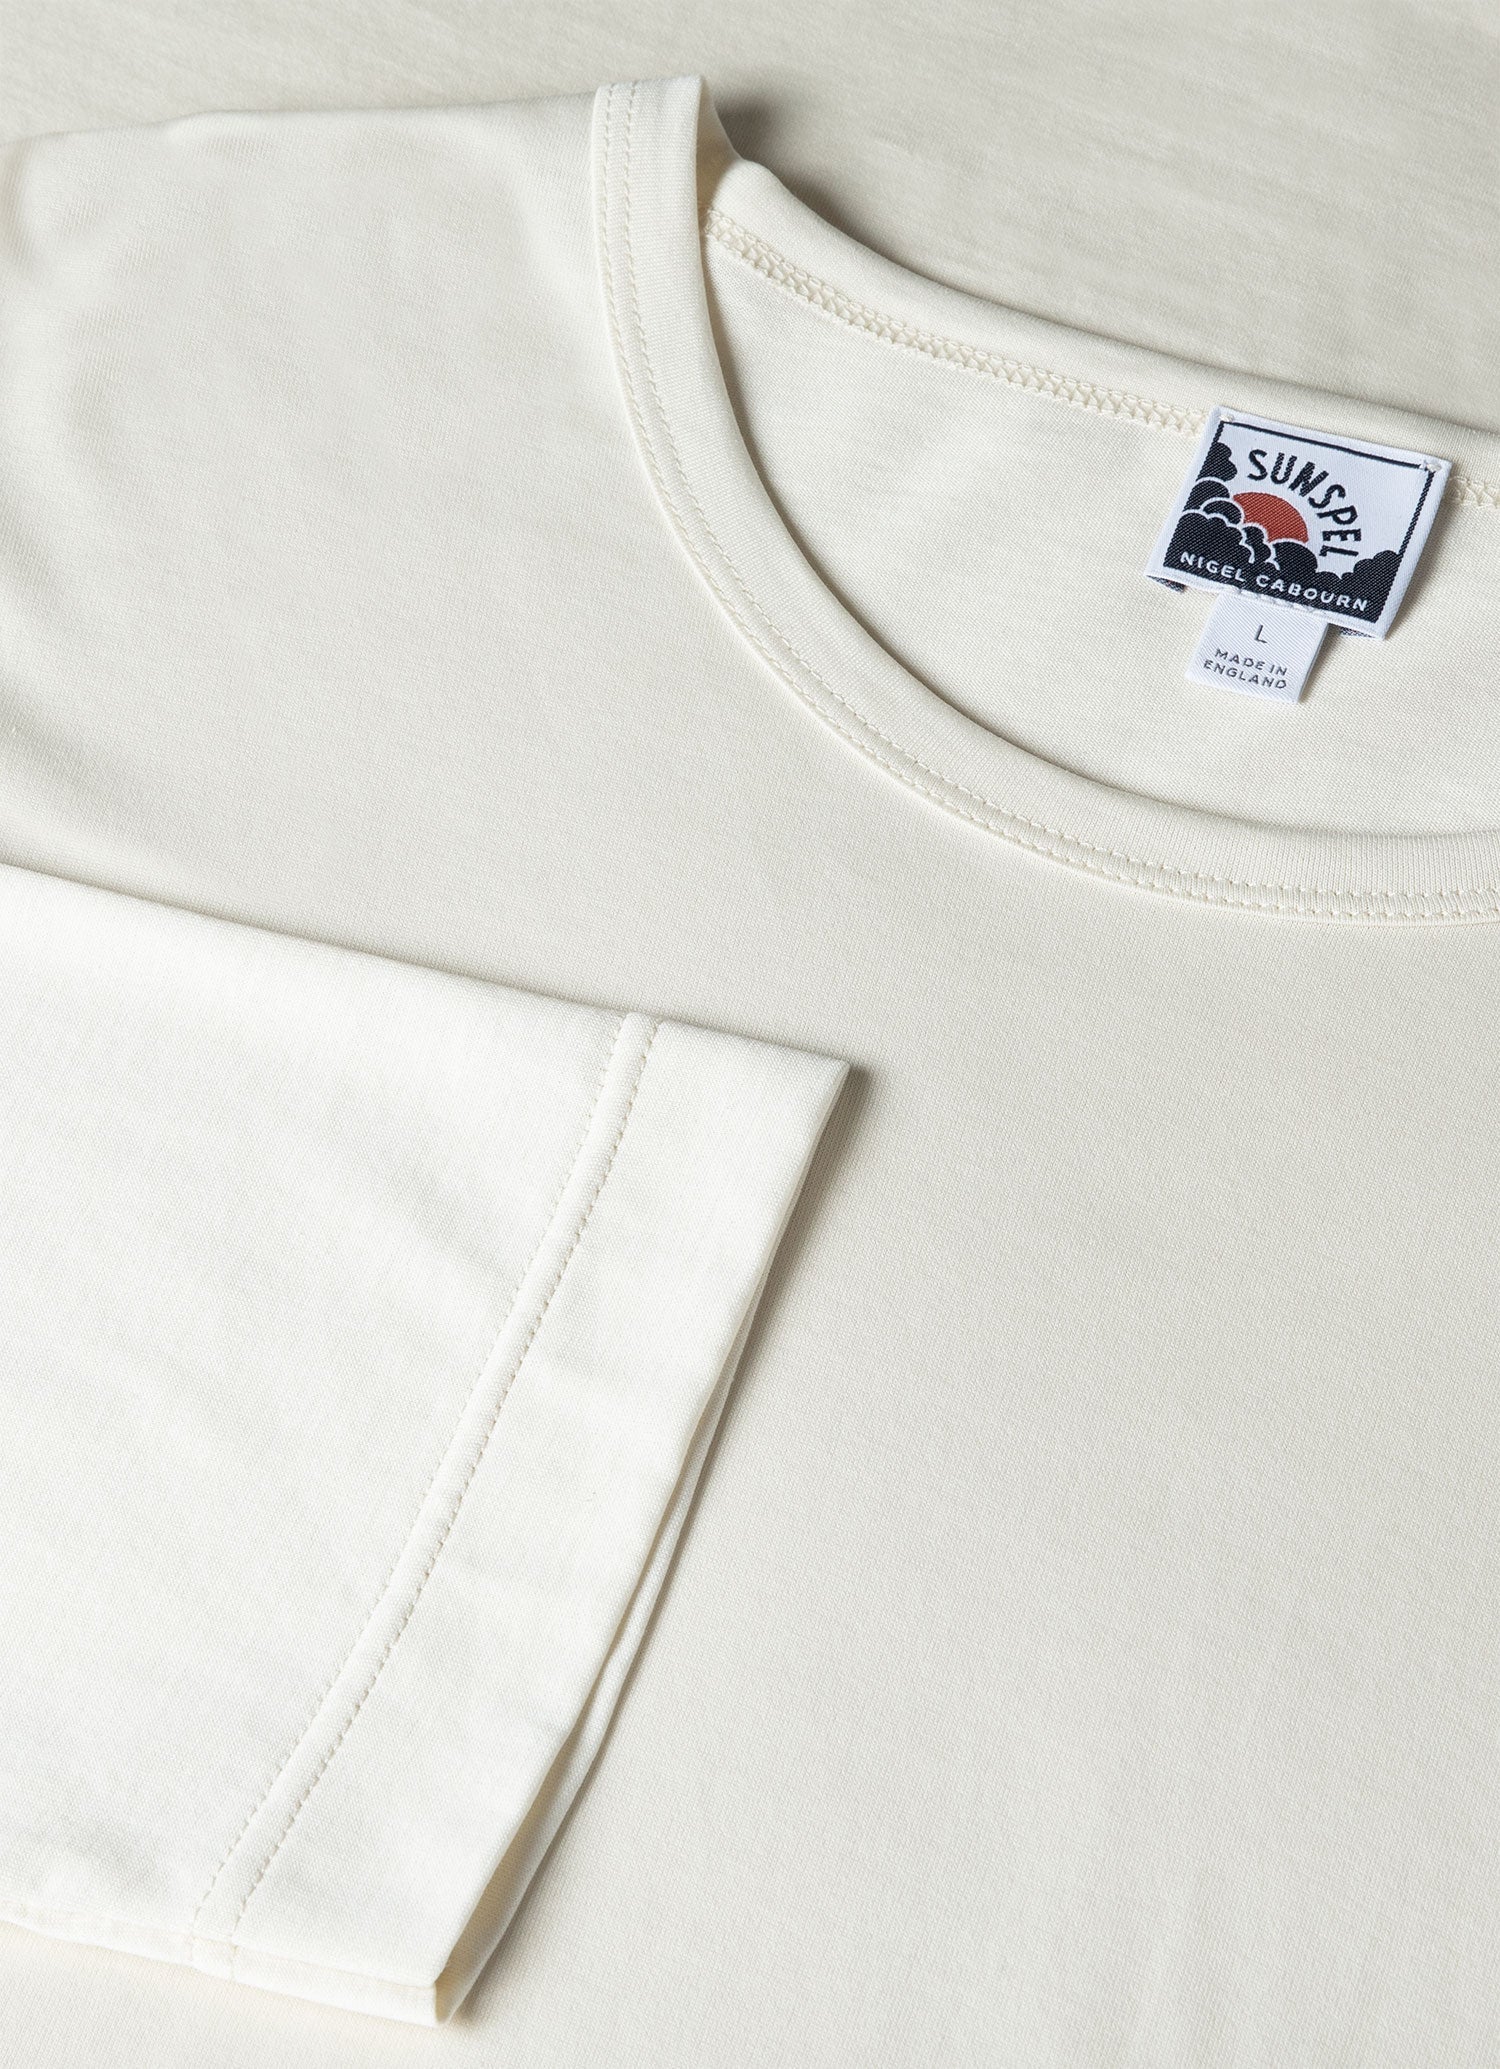 Men's Sunspel x Nigel Cabourn Long Sleeve T-shirt in Stone White